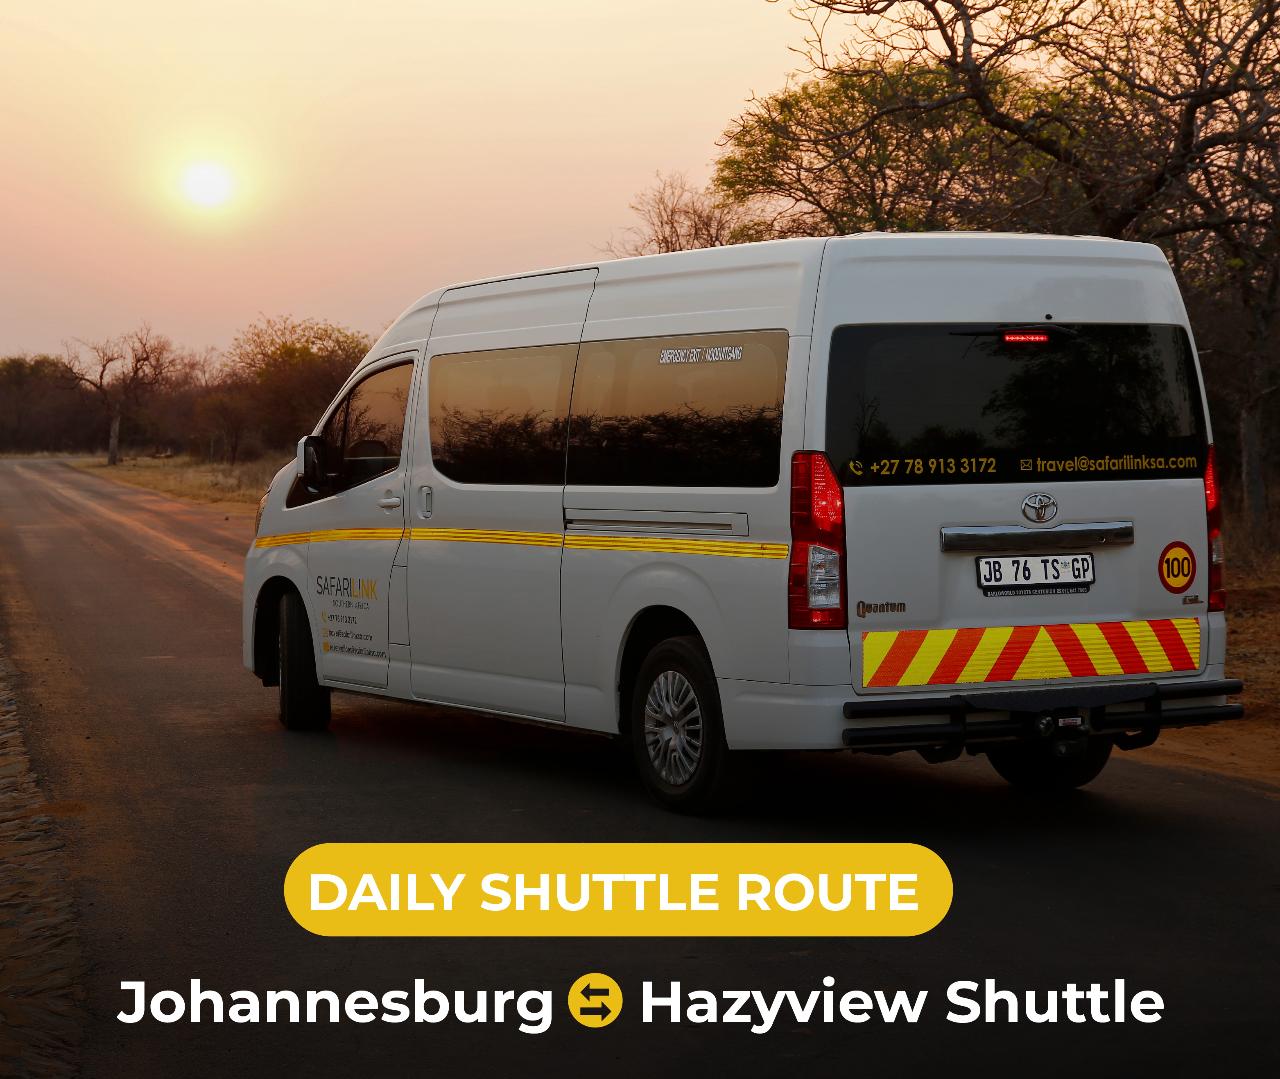  Johannesburg to Hazyview Shuttle